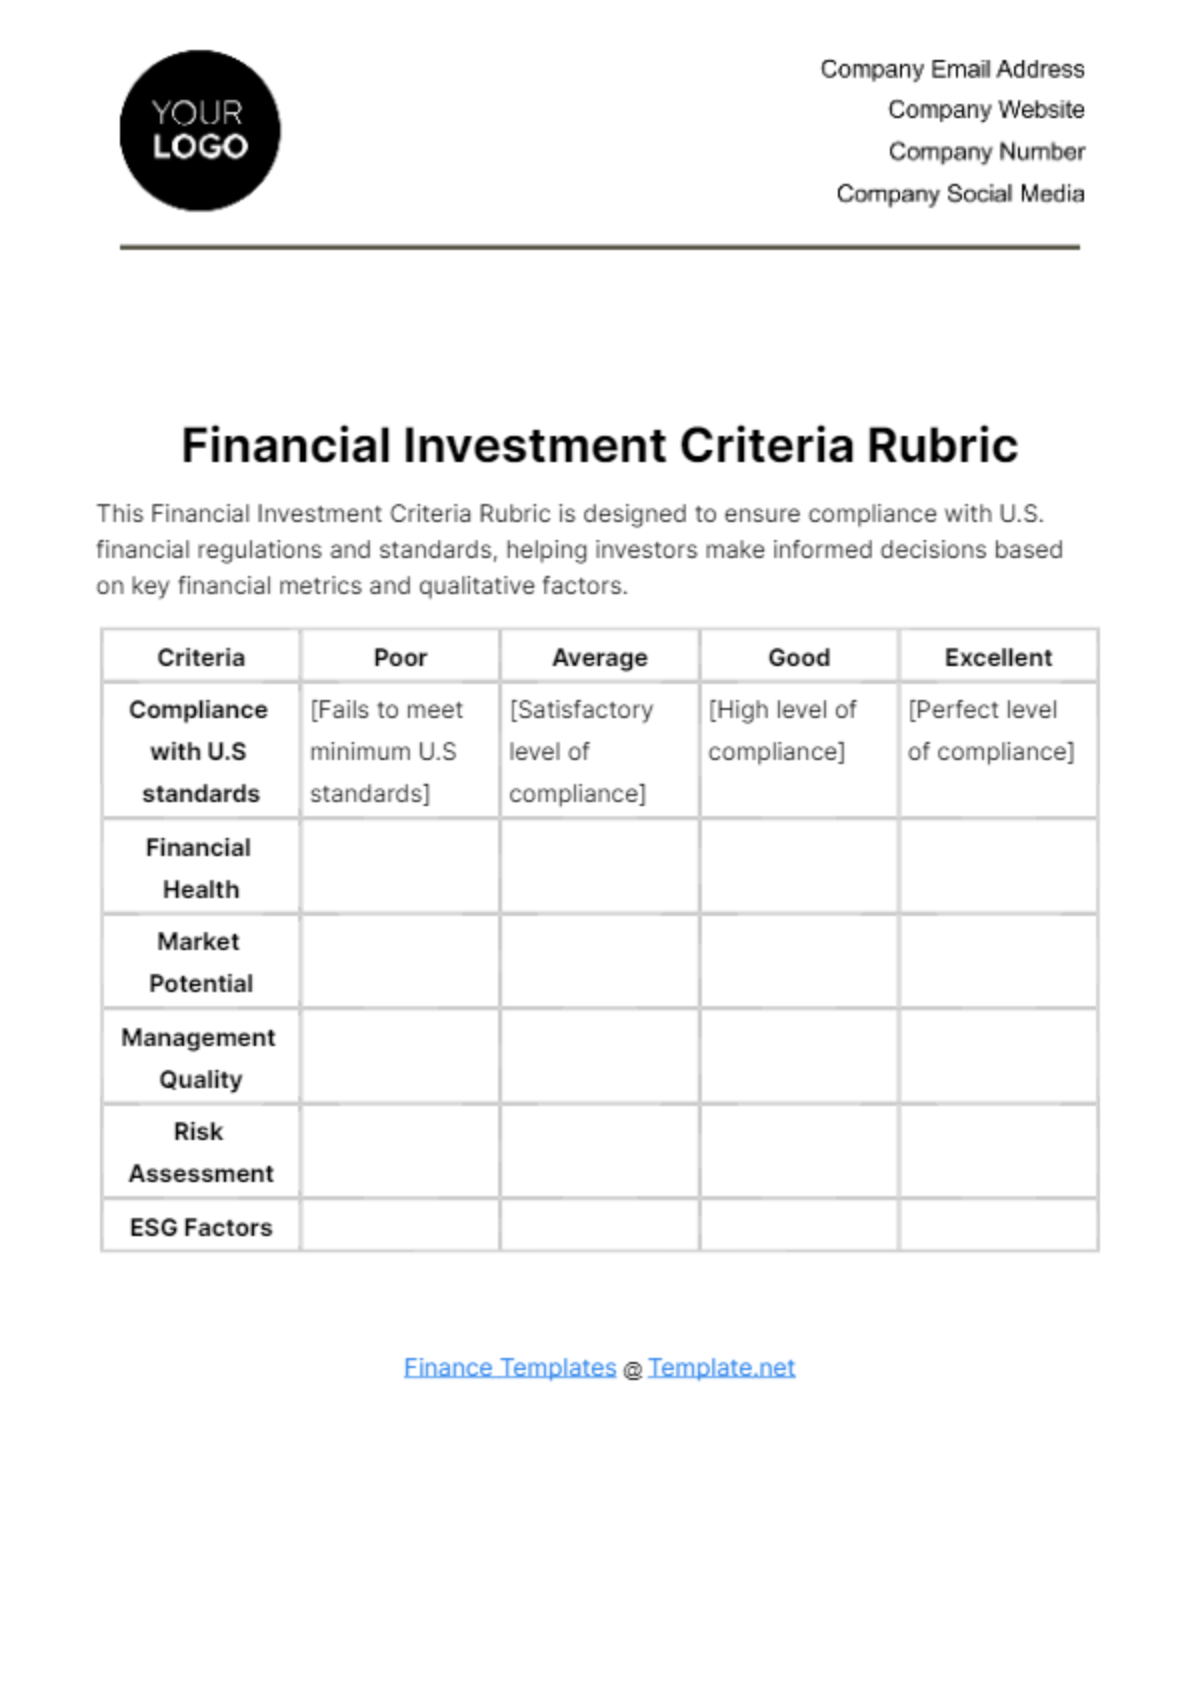 Financial Investment Criteria Rubric Template